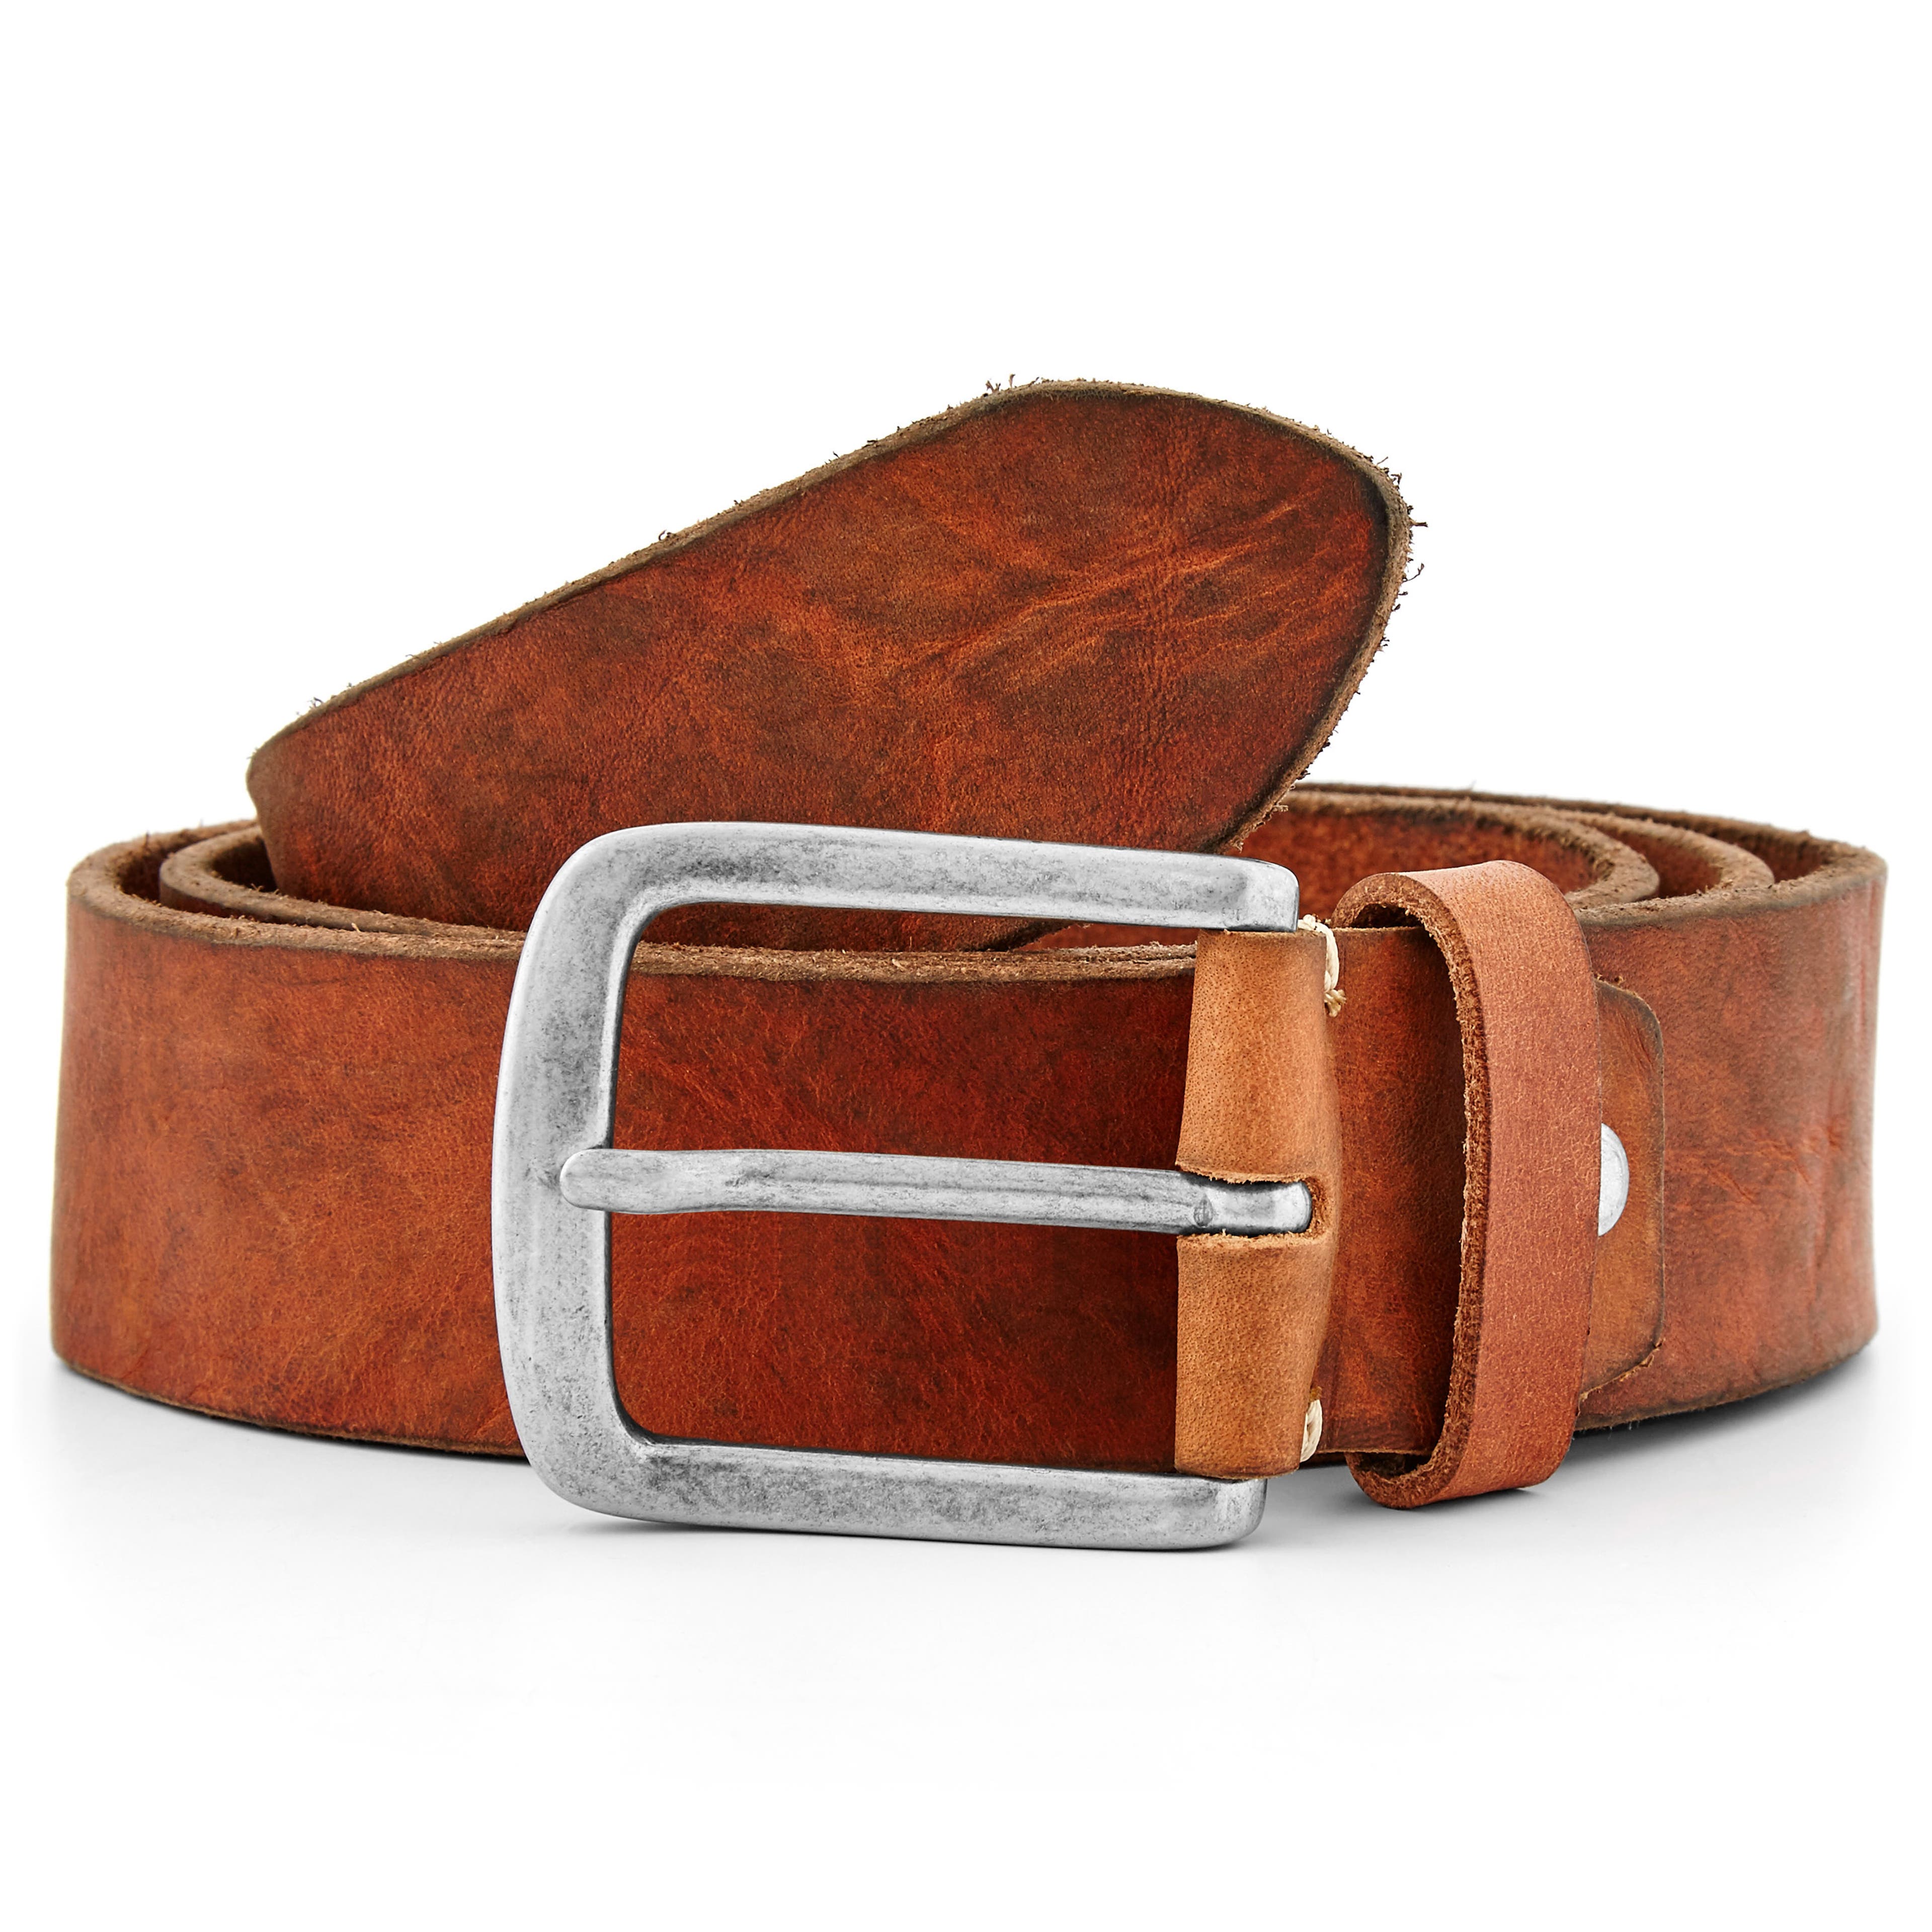 Mottled Tan Leather Belt